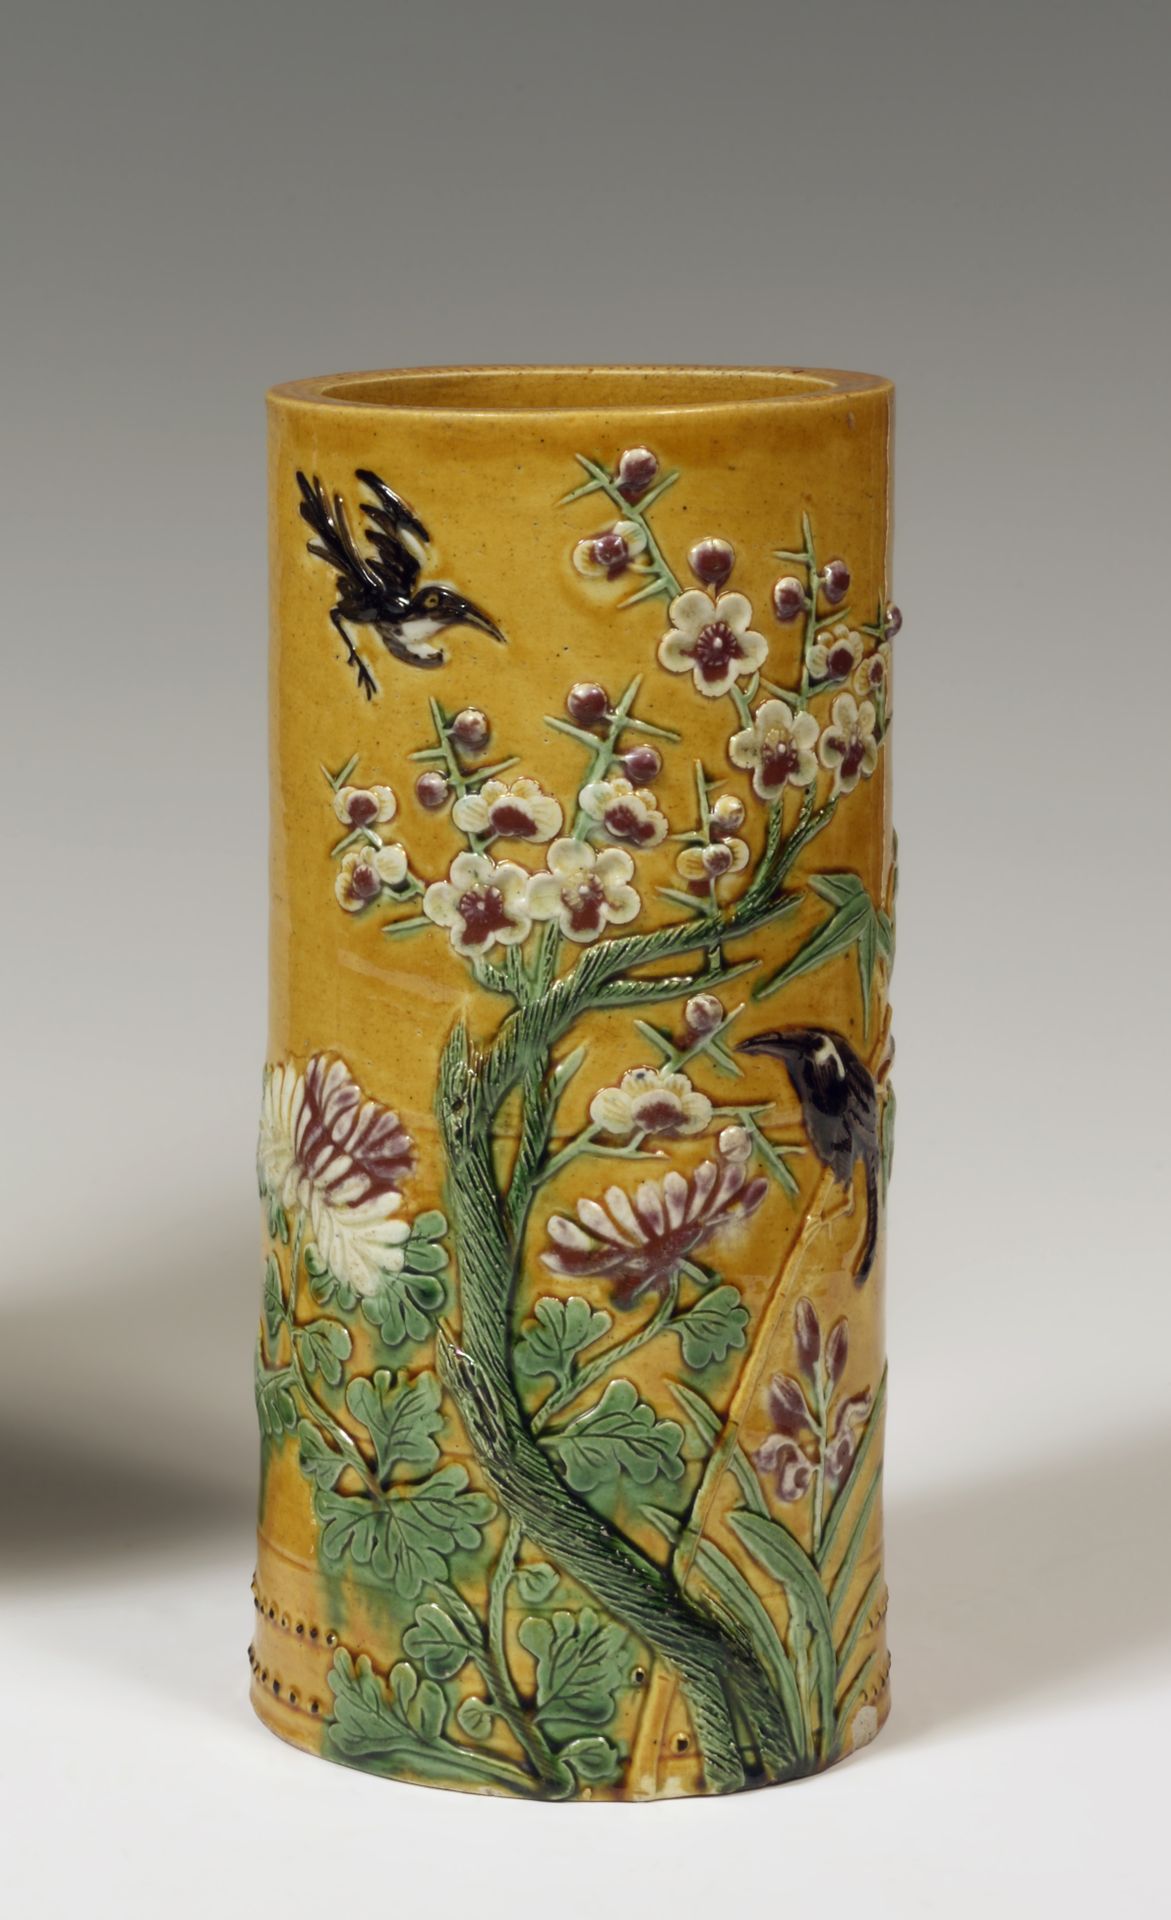 Null 
中国

黄、绿、黑、褐四色珐琅彩圆柱形花瓶，有鸟、梅花和牡丹的浮雕装饰。

19世纪。 

H.27厘米。

基地上的芯片。